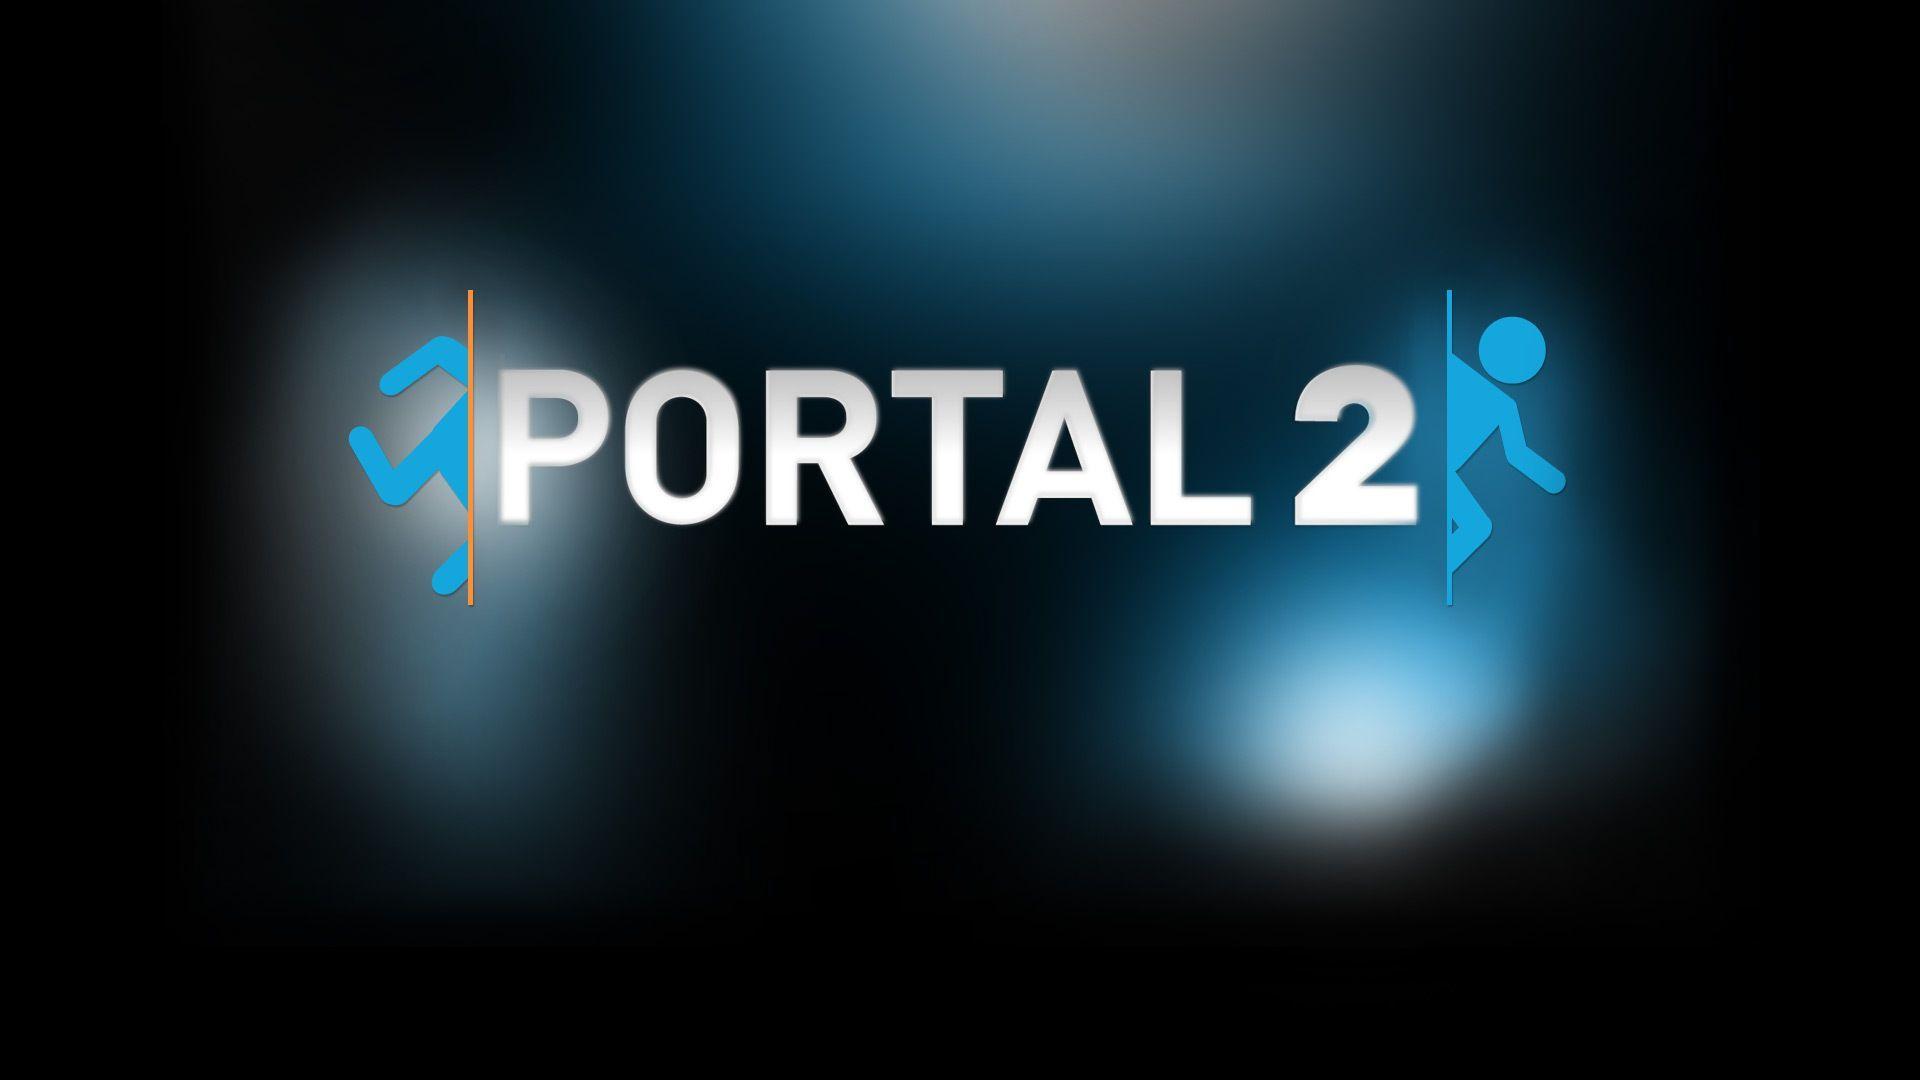 Portal 2 Background Portal 2 Trading